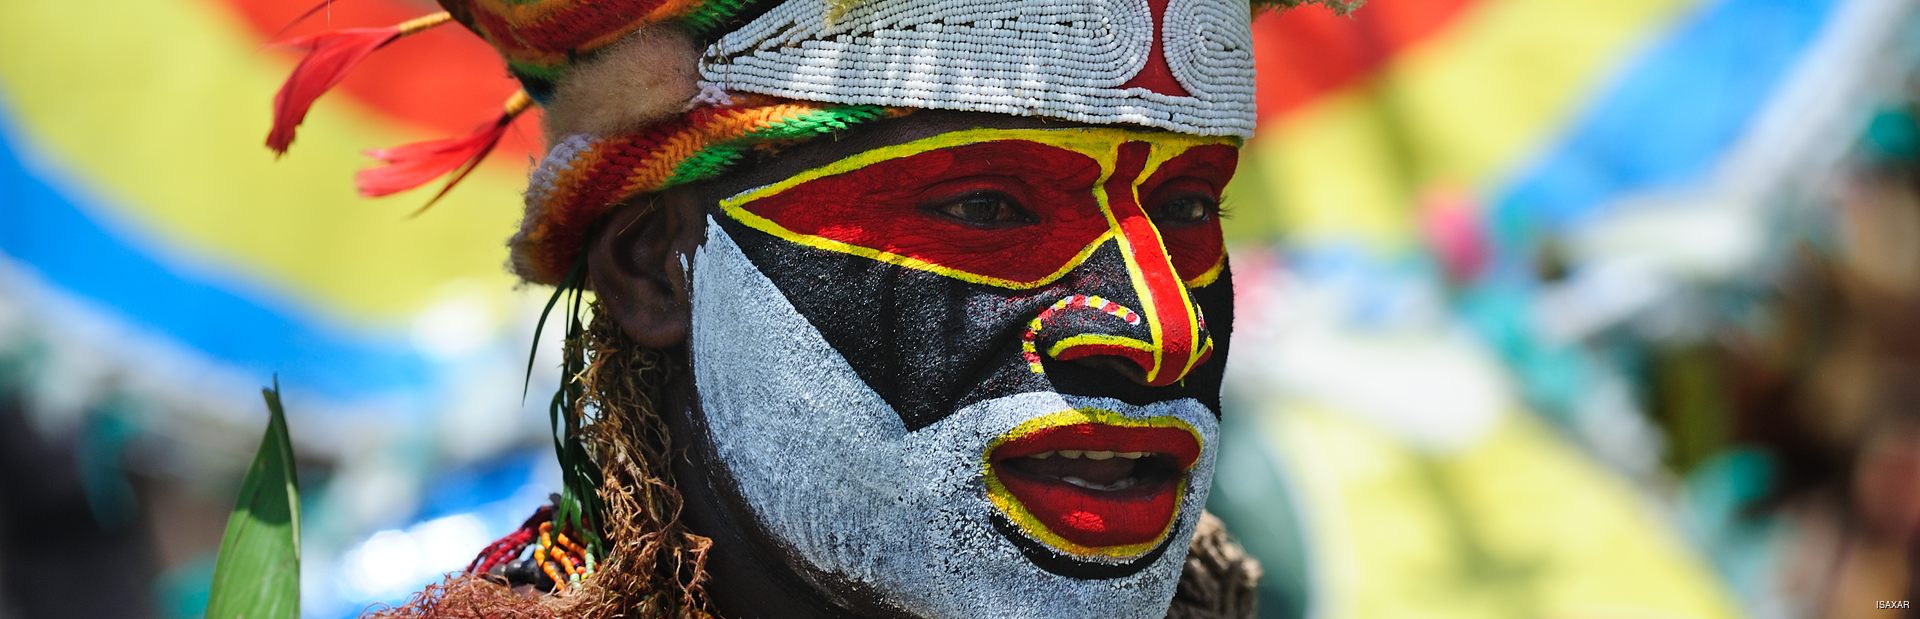 Papua New Guinea tribal man